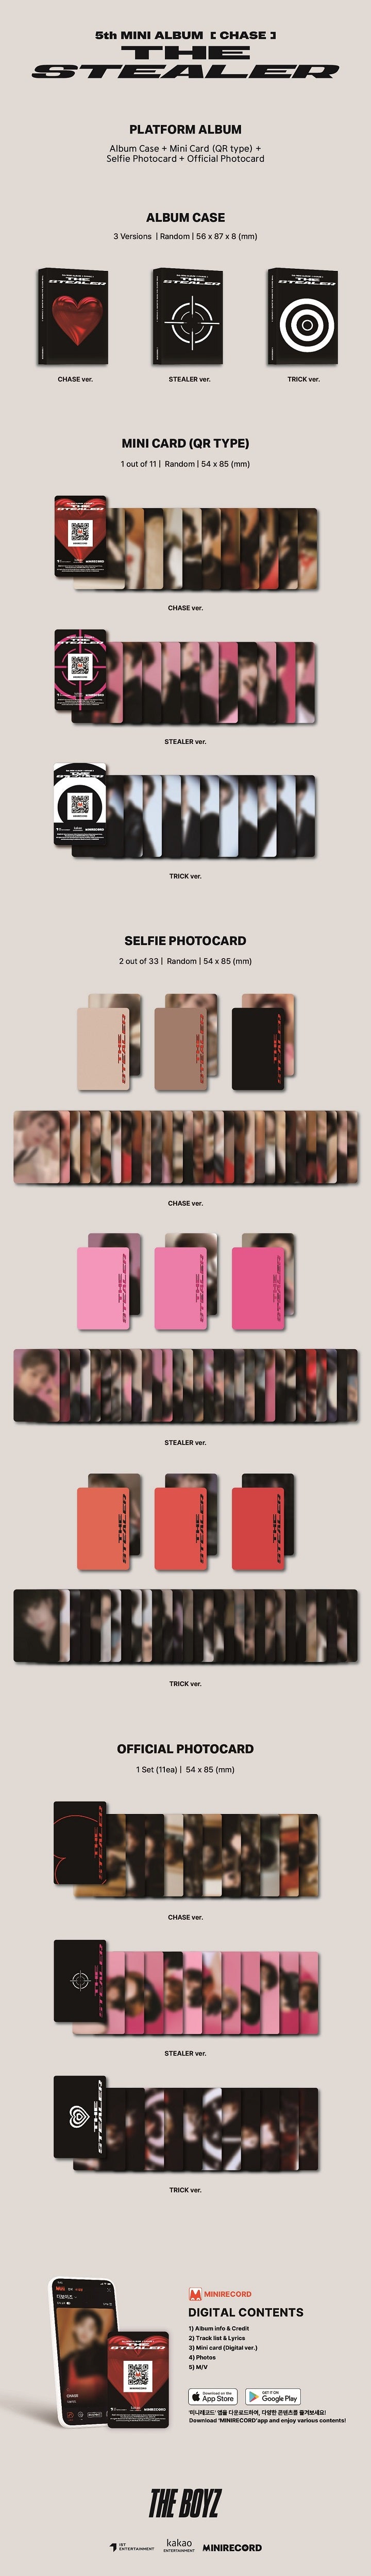 1 Mini Card (QR Type, random out of 11 types)
2 Selfie Photo Card (random out of 33types)
11 Official Photo Cards